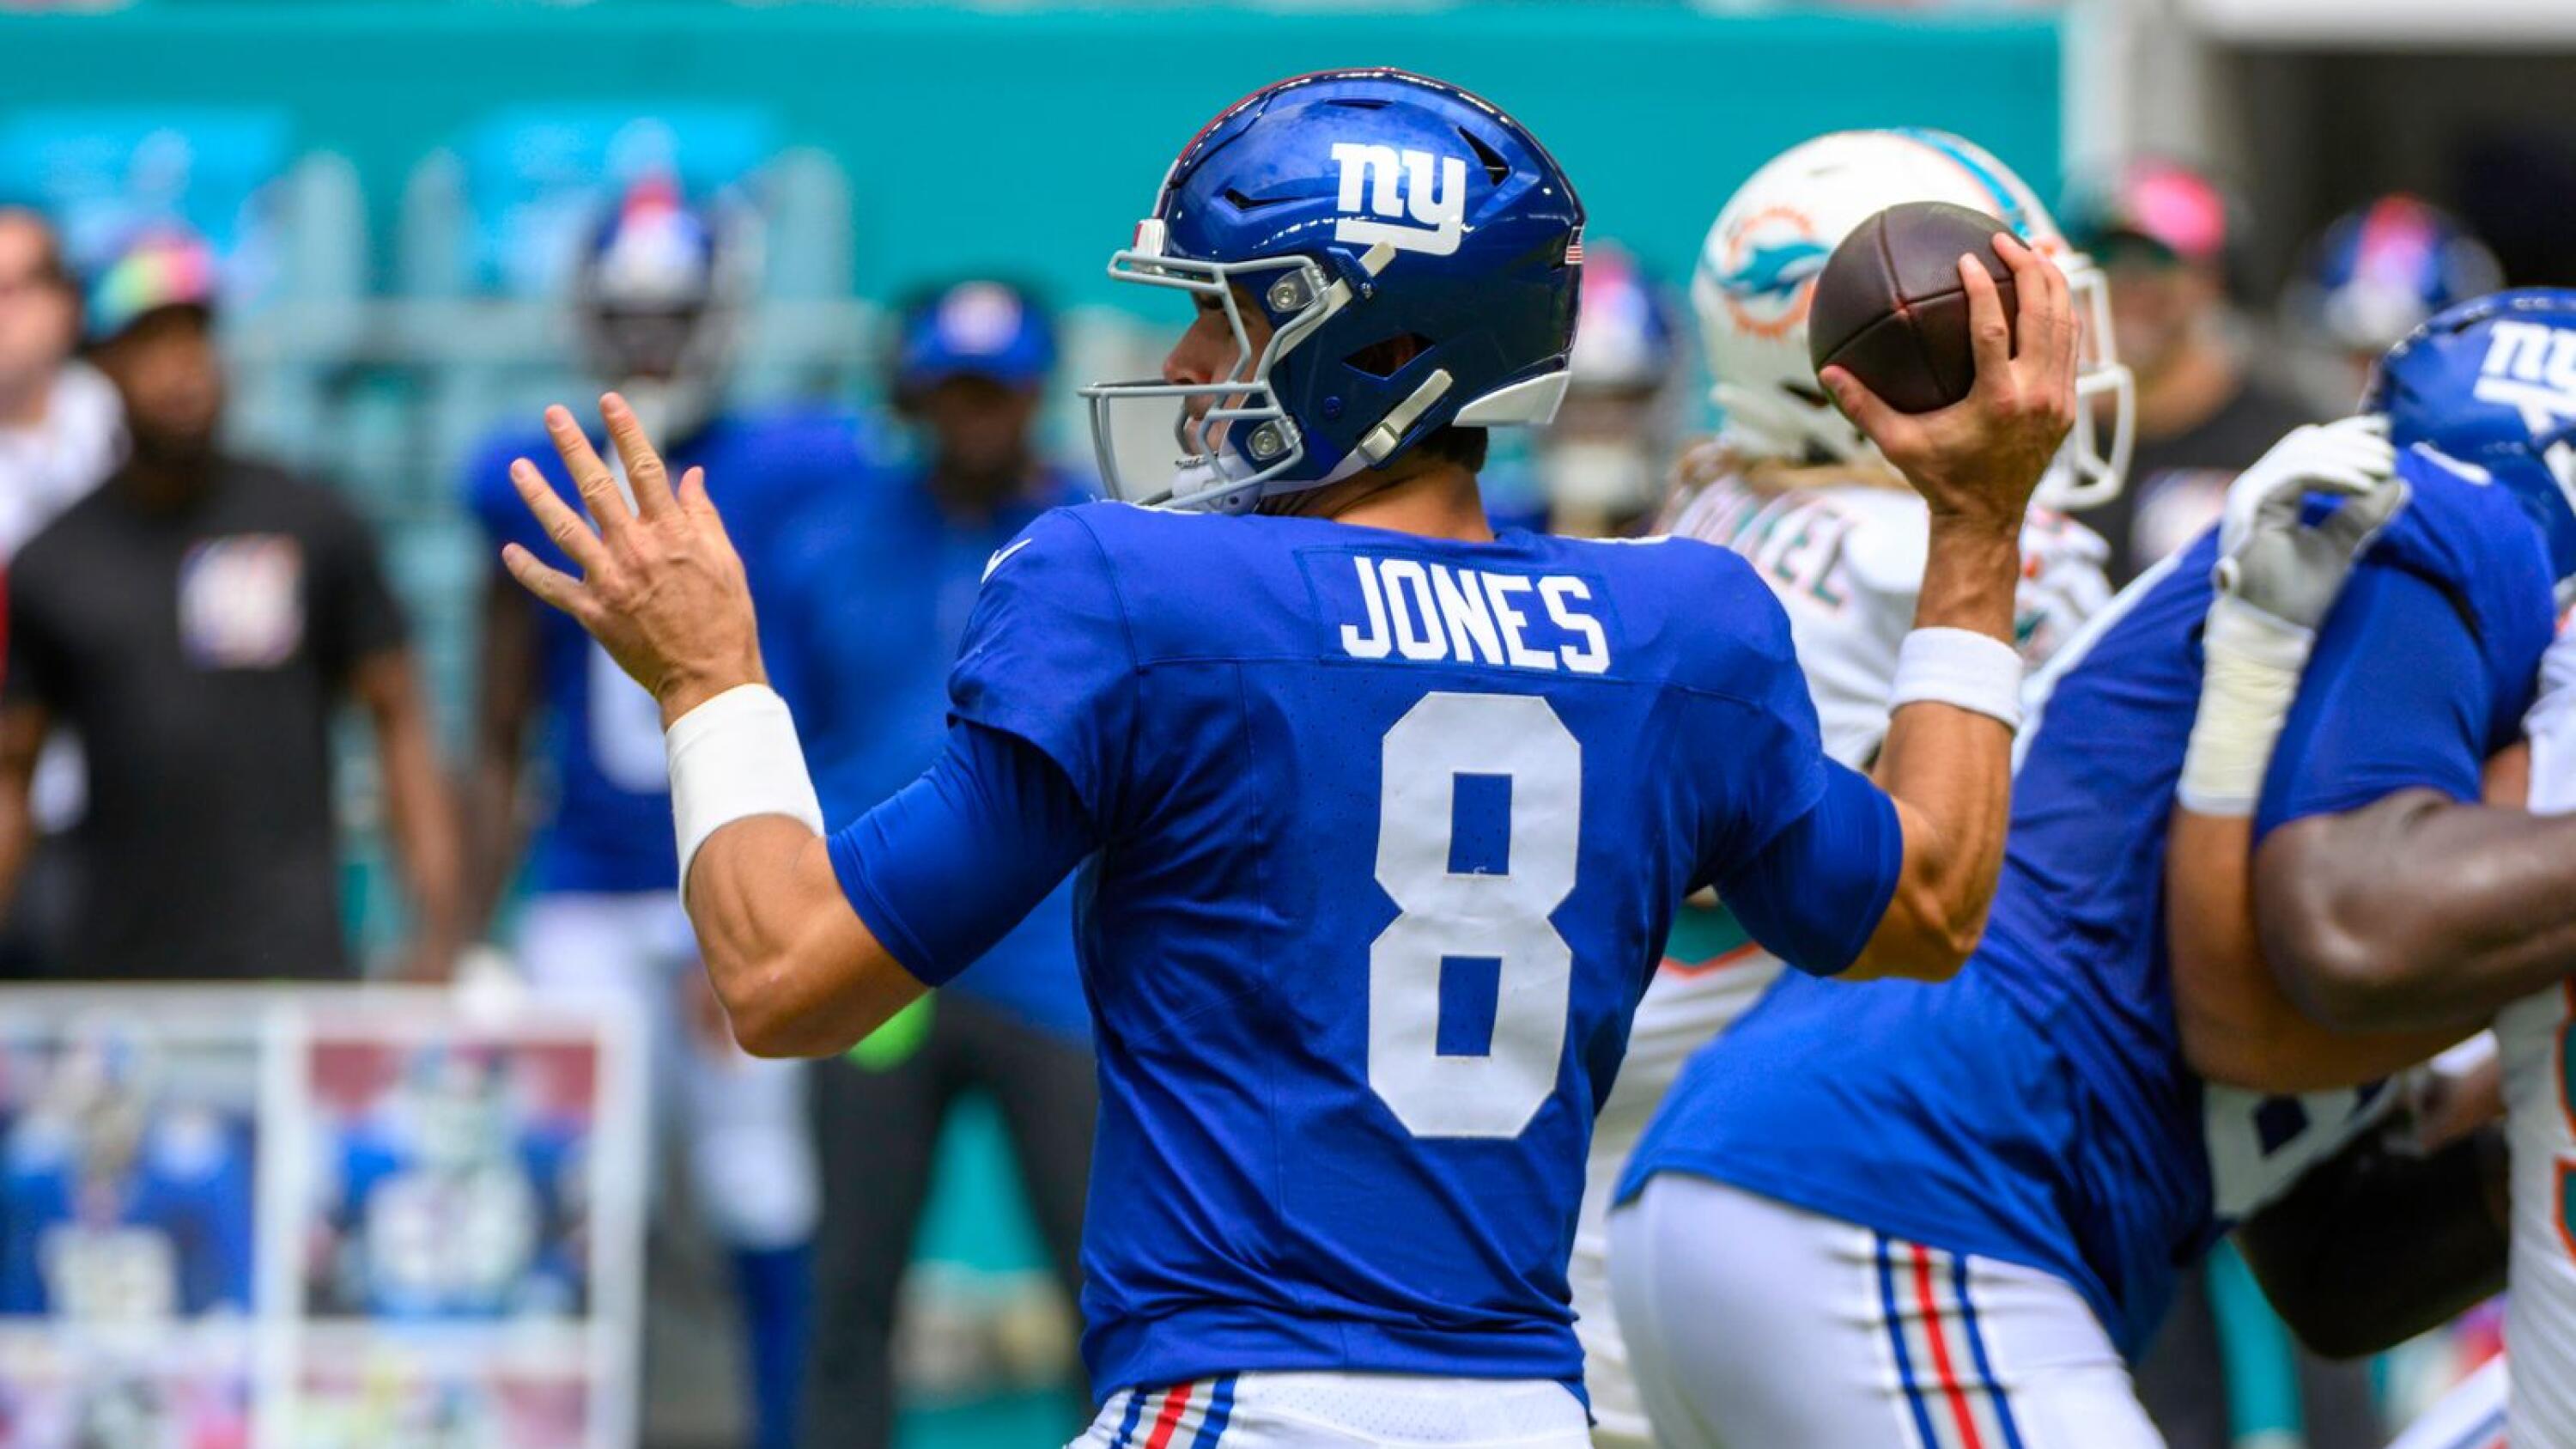 Giants quarterback Daniel Jones misses practice because of neck injury